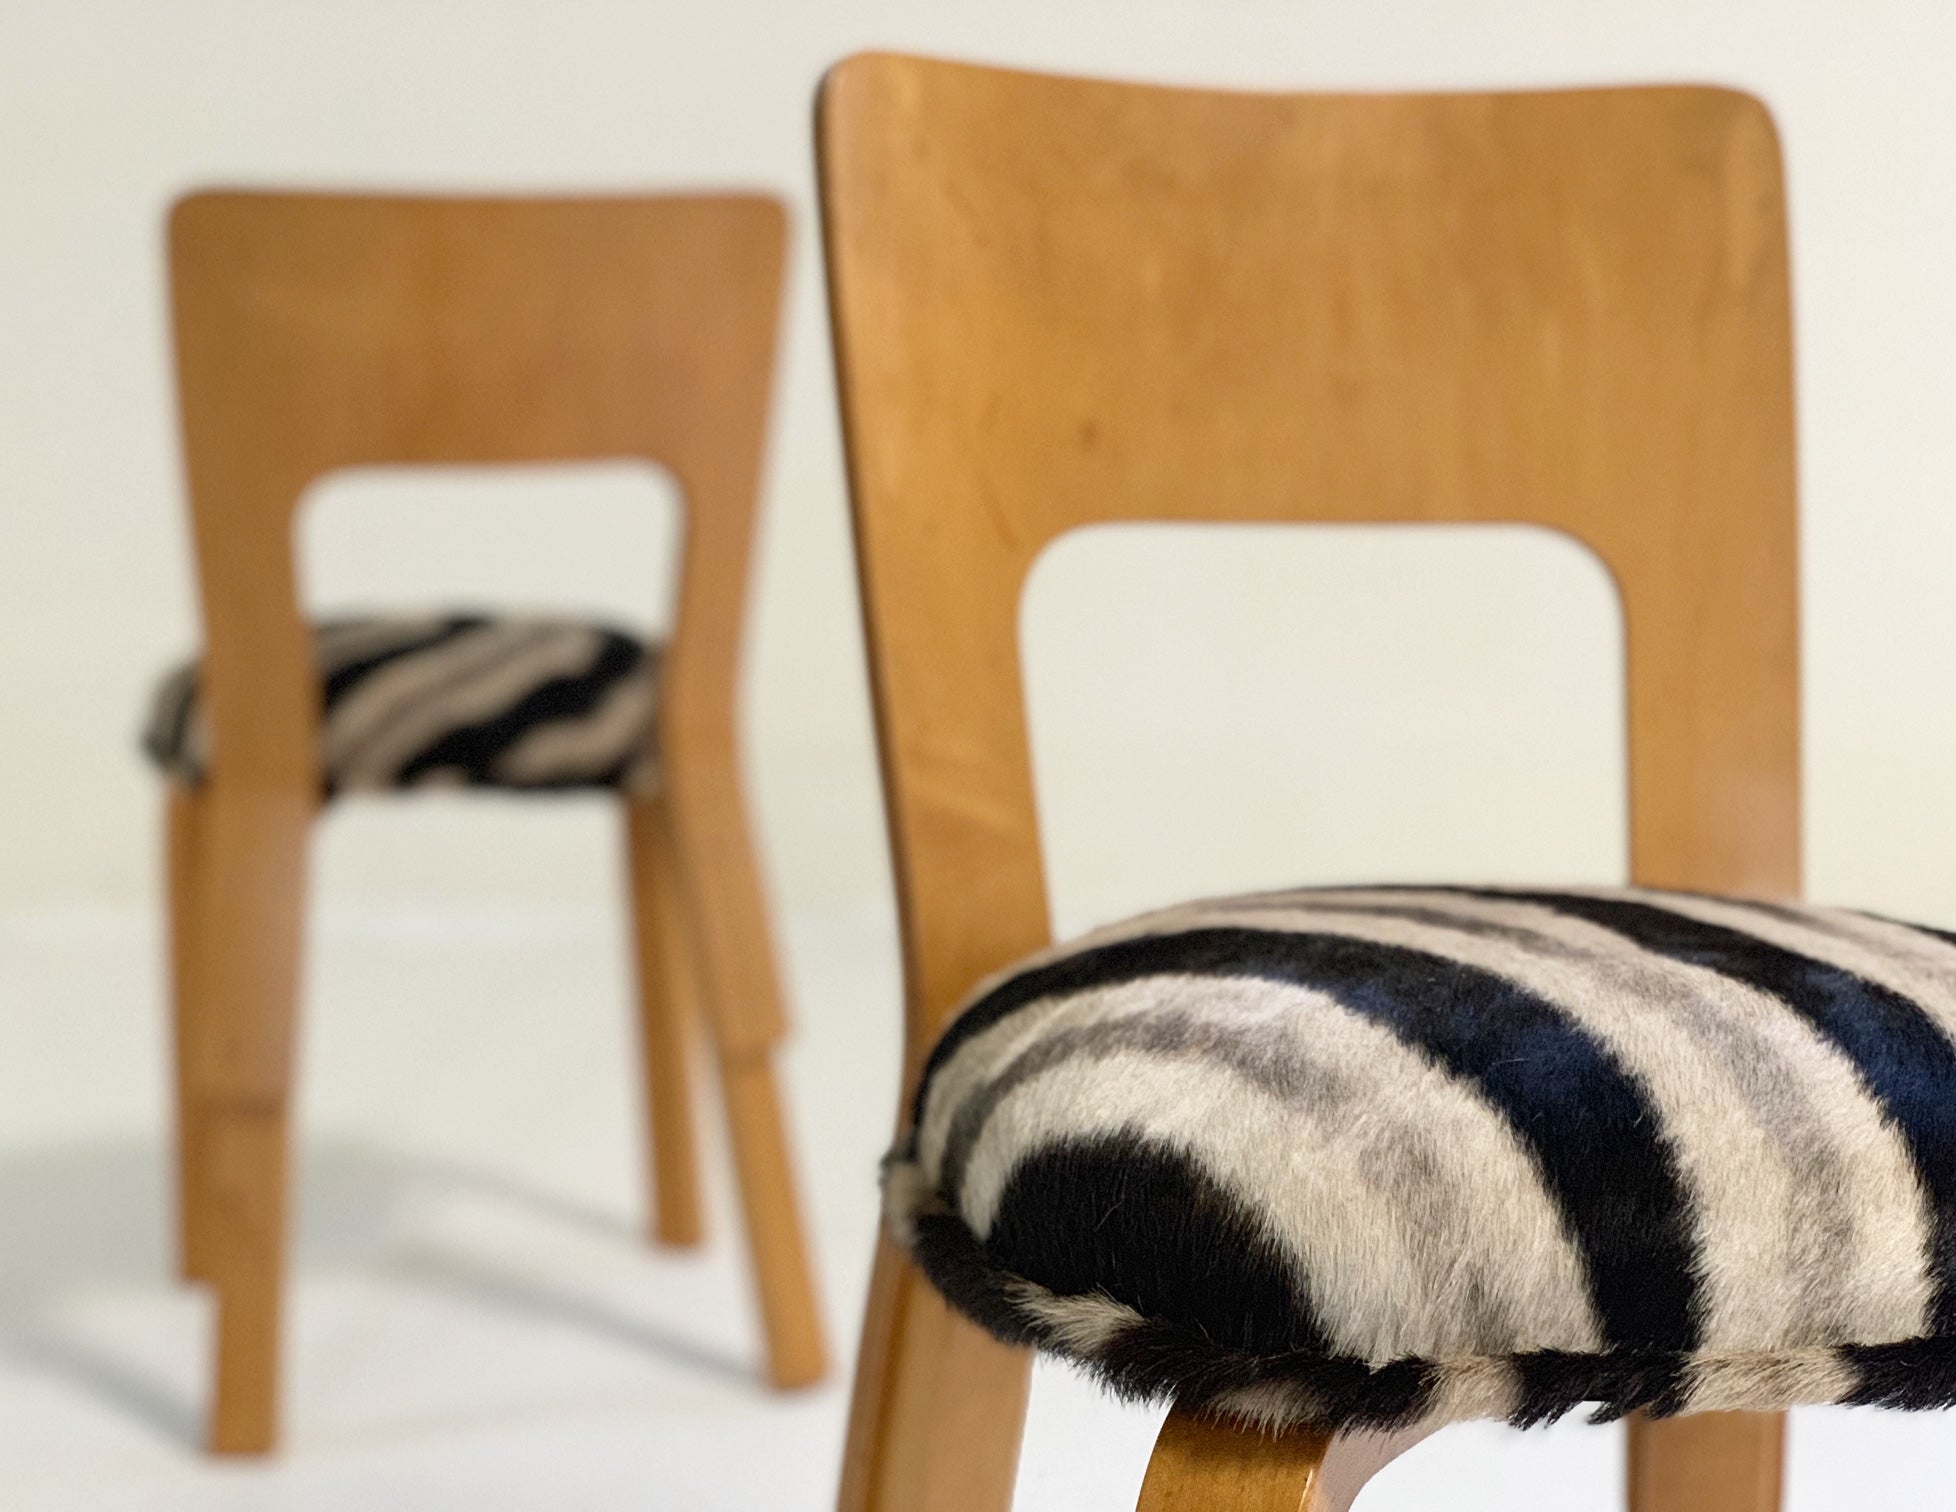 Model 66 Chairs in Zebra Hide, pair - FORSYTH